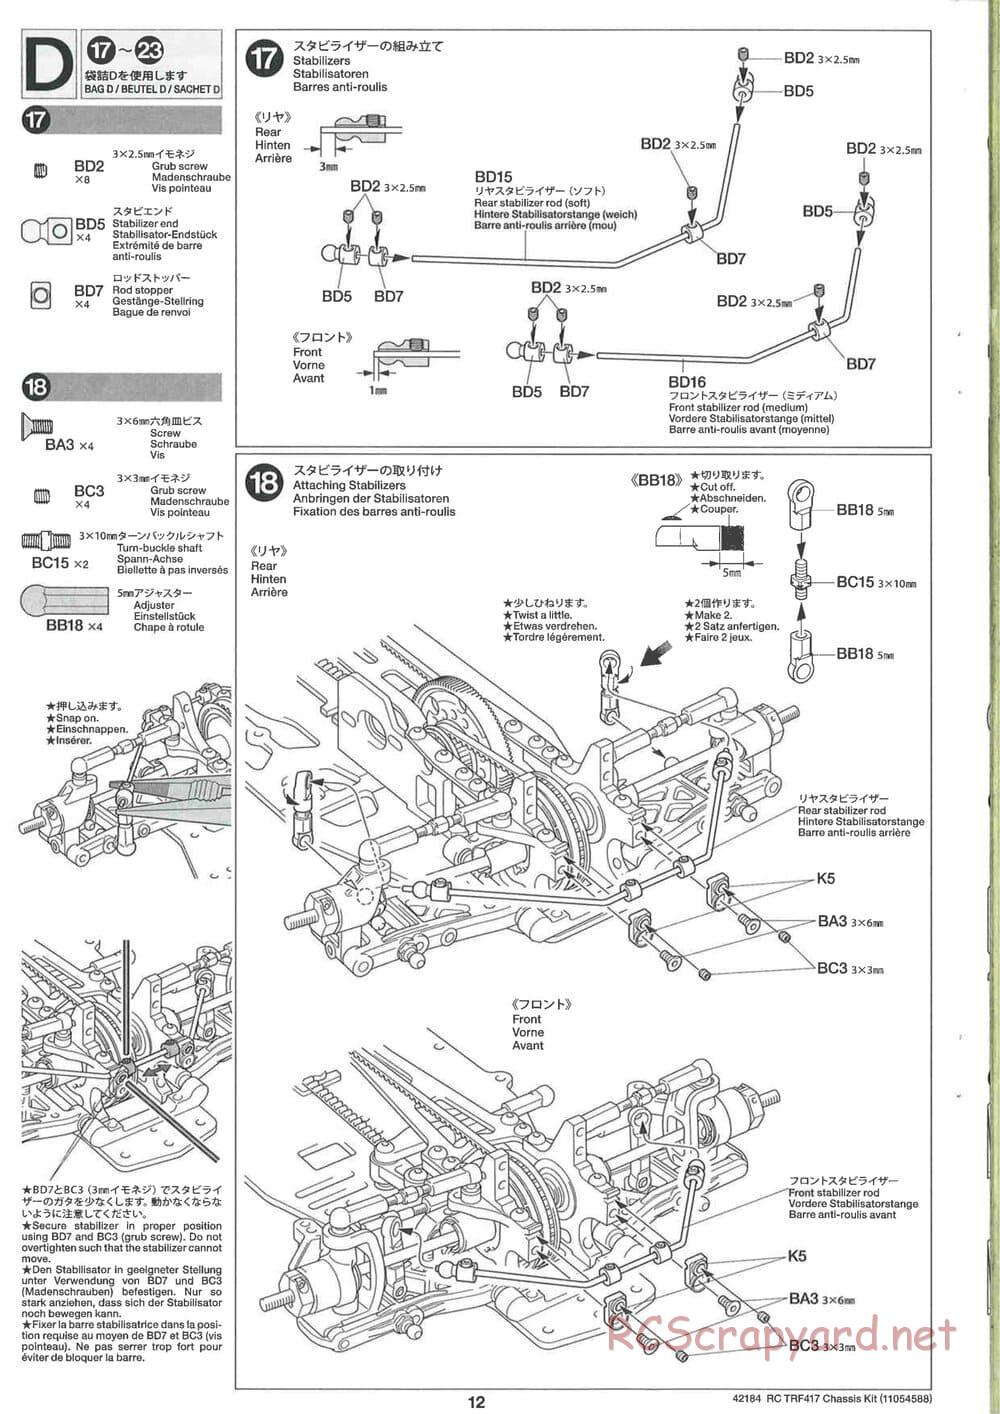 Tamiya - TRF417 Chassis - Manual - Page 12